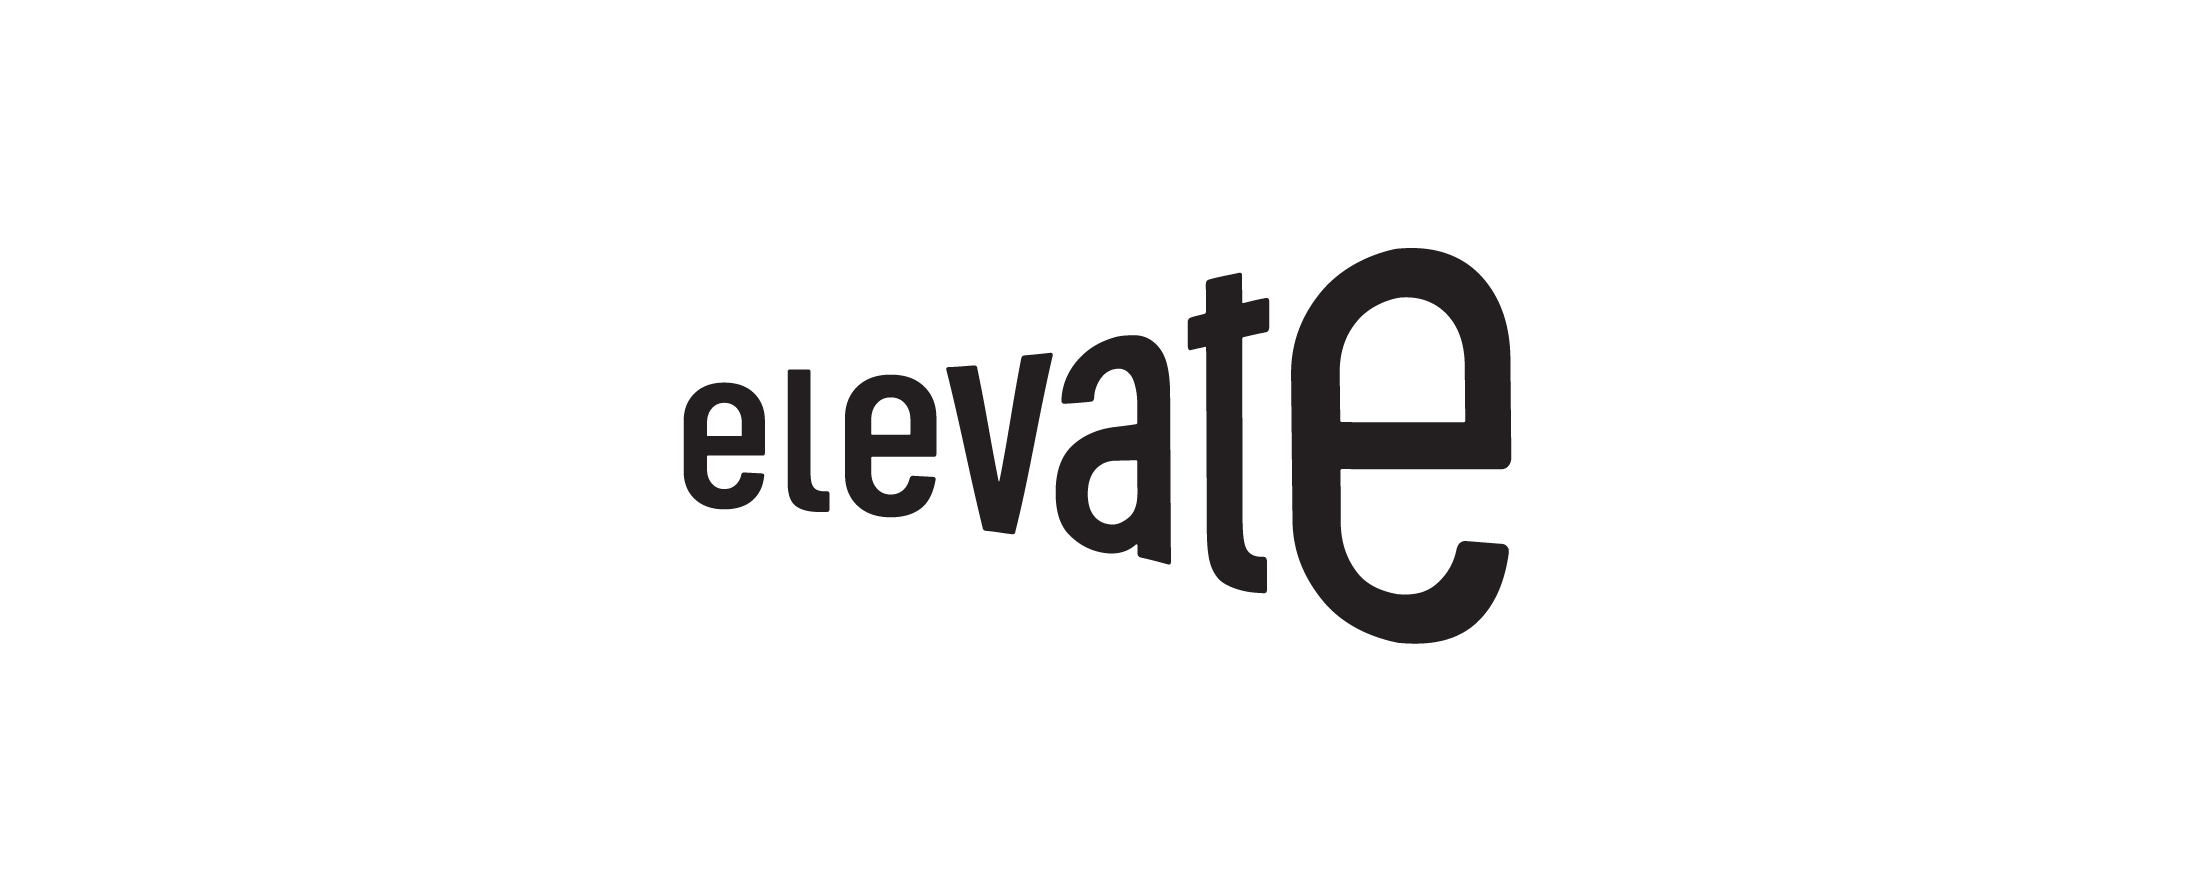 Elevate Typography Logo Design Inspiration Stock Vector (Royalty Free)  2131450027 | Shutterstock